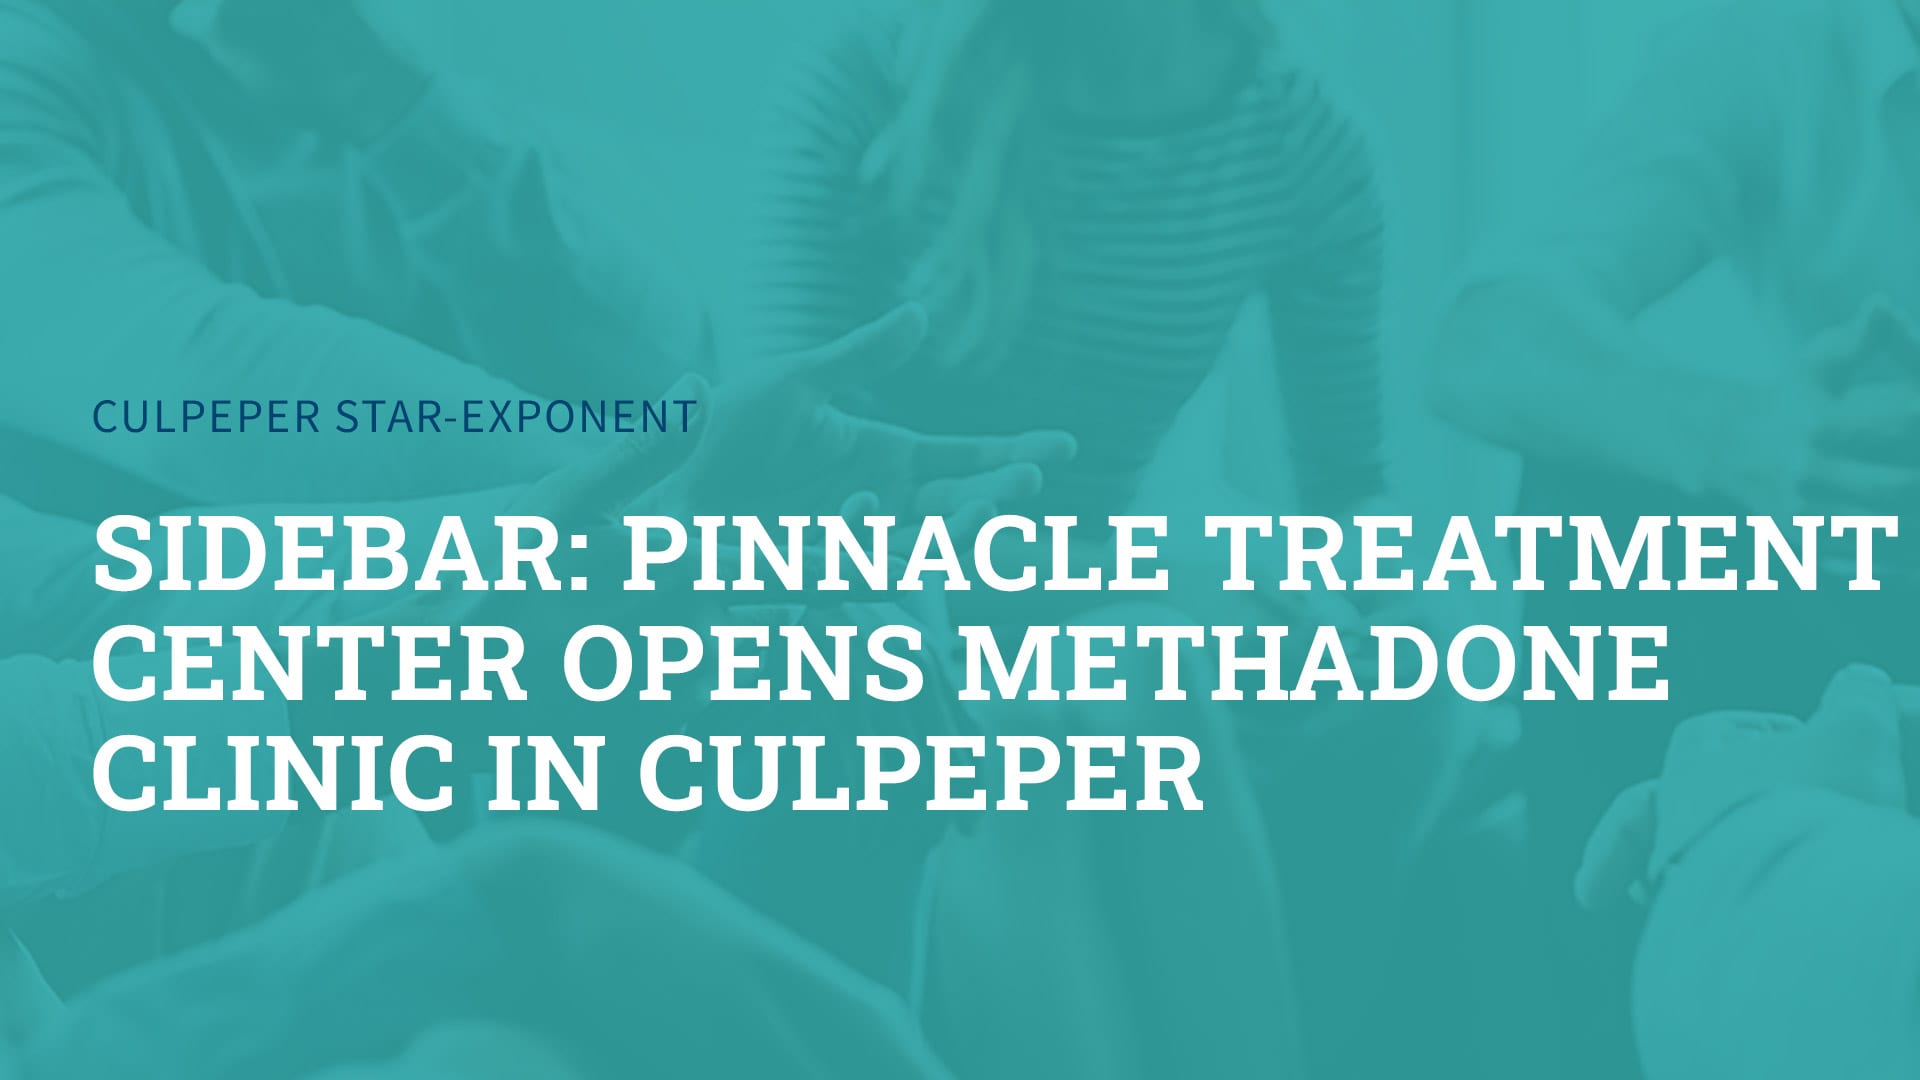 Pinnacle Treatment Centers Opens Methadone Clinic in Culpeper